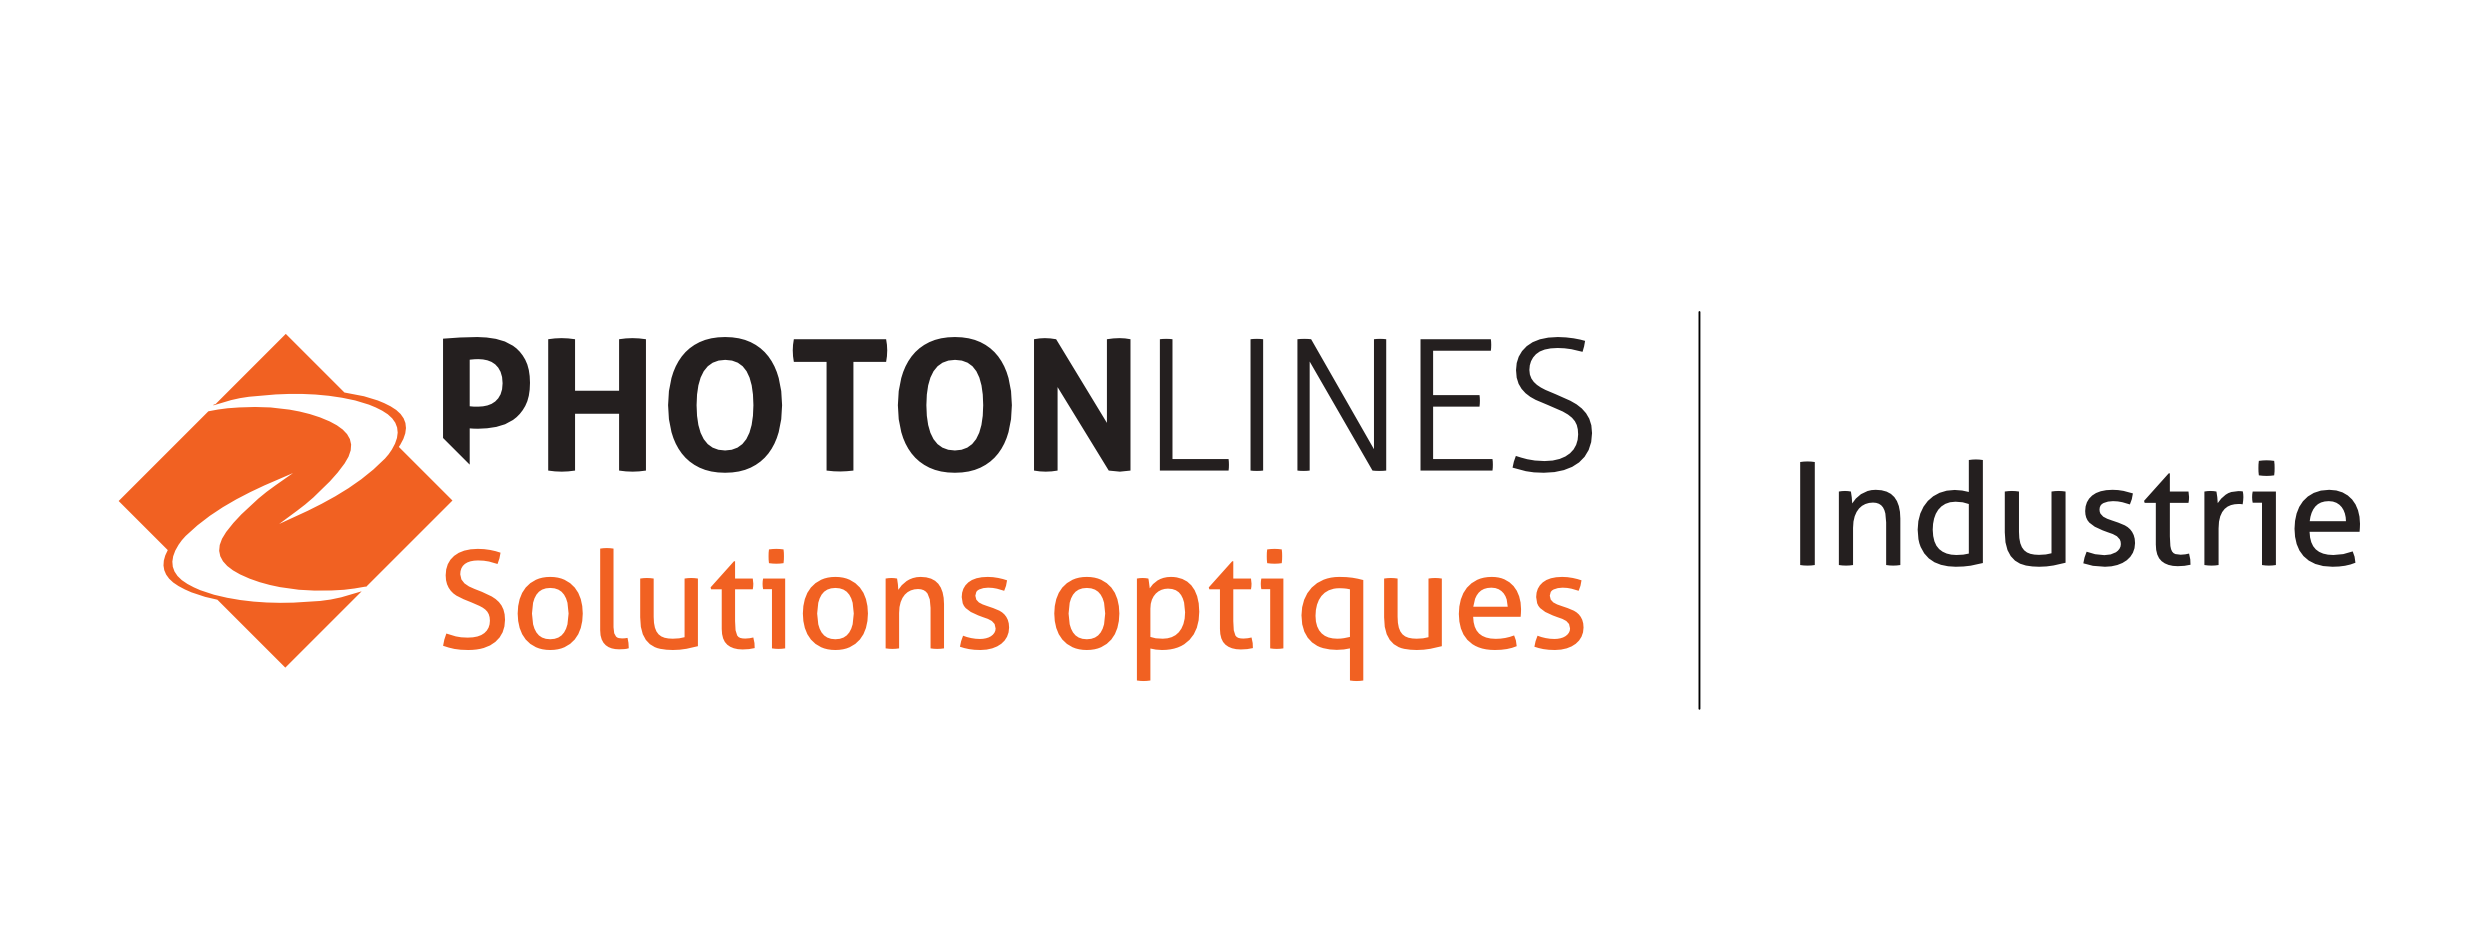 Photon Lines logo